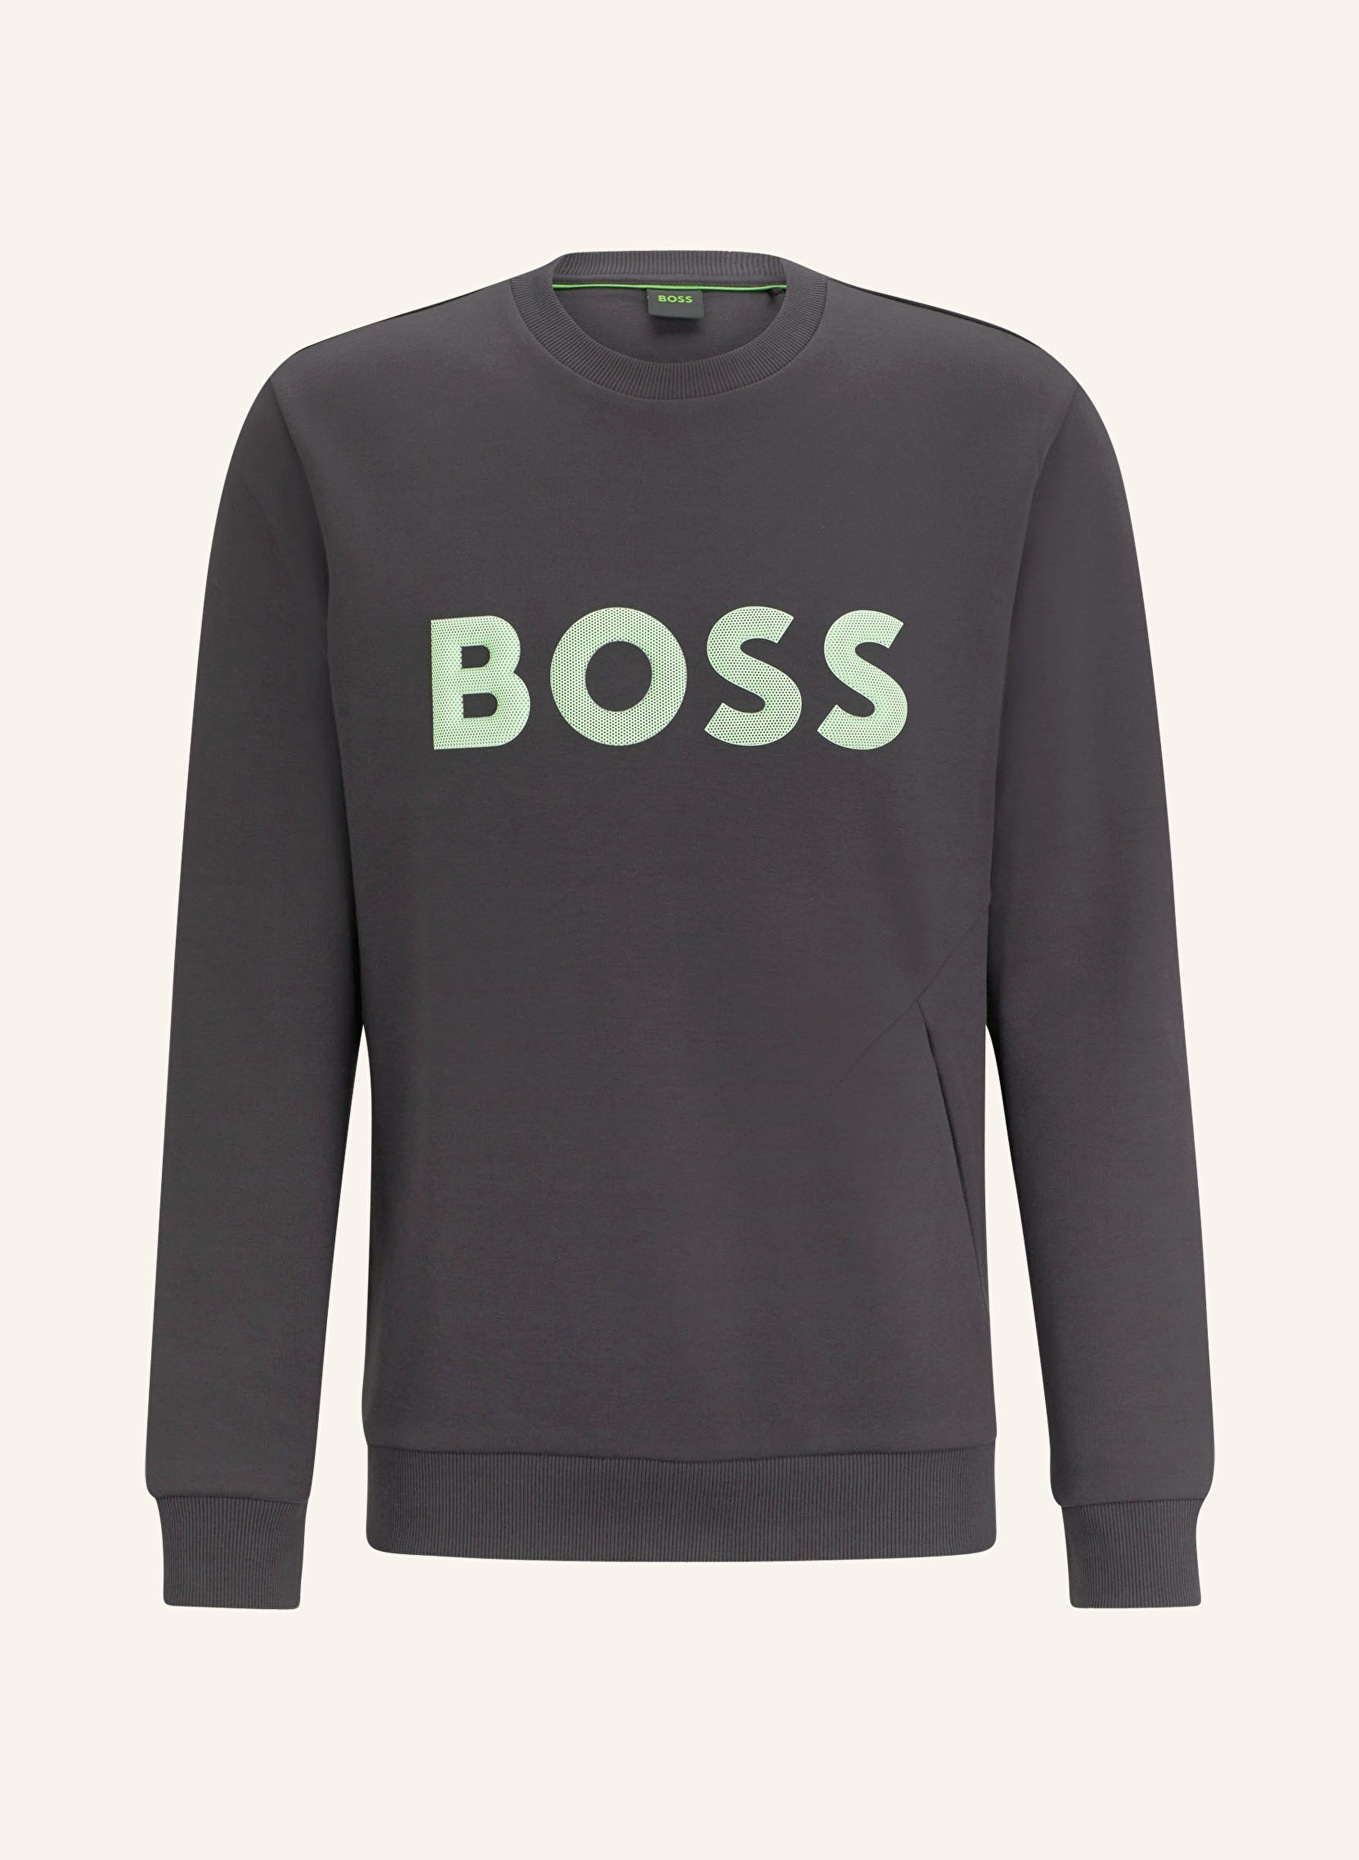 BOSS Sweatshirt SALBO, Farbe: DUNKELGRAU/ HELLGRÜN (Bild 1)